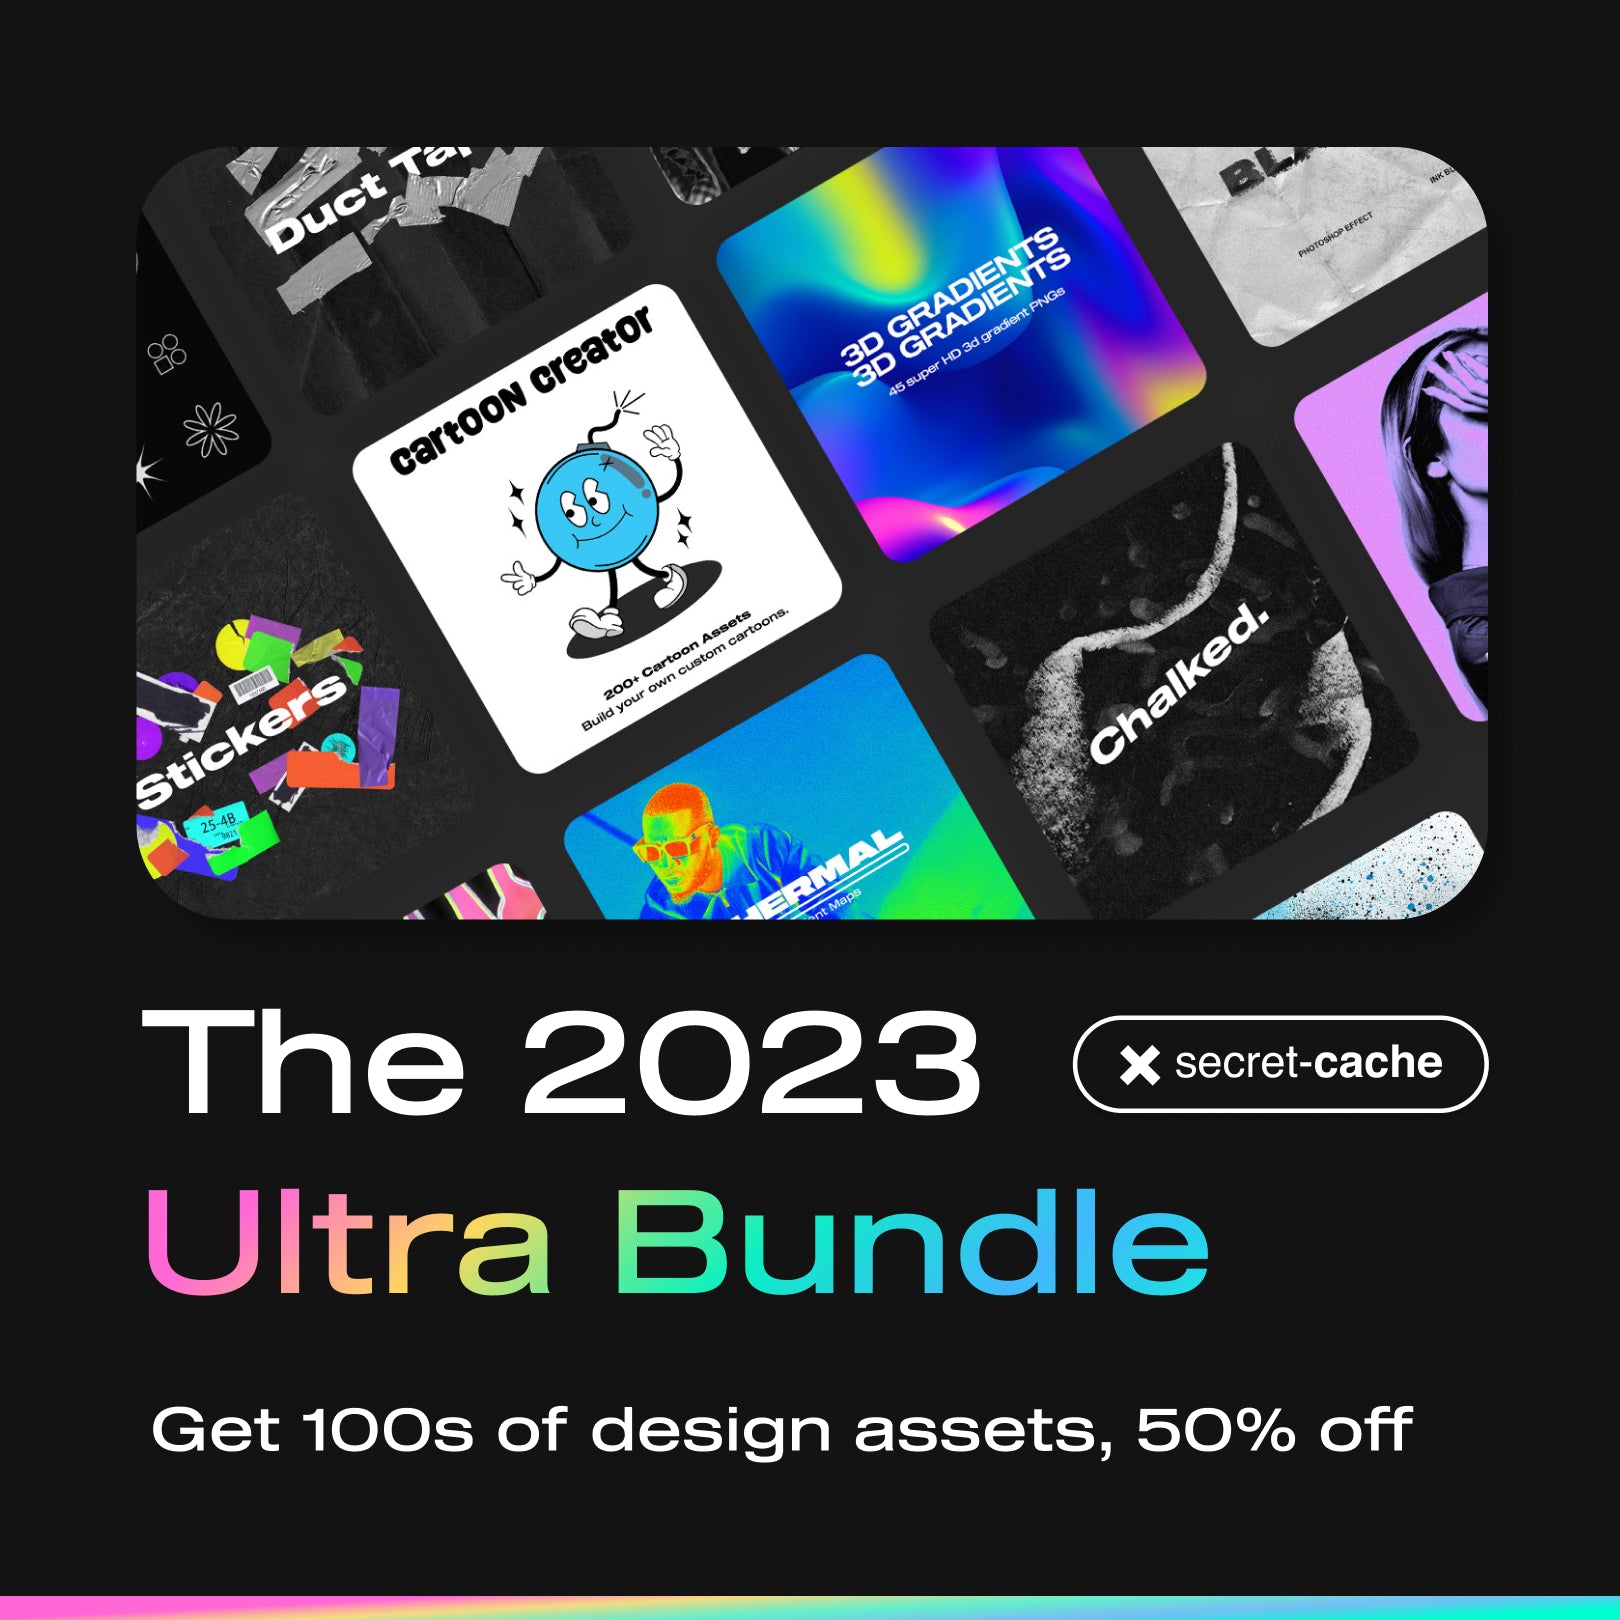 The 2023 Ultra Bundle